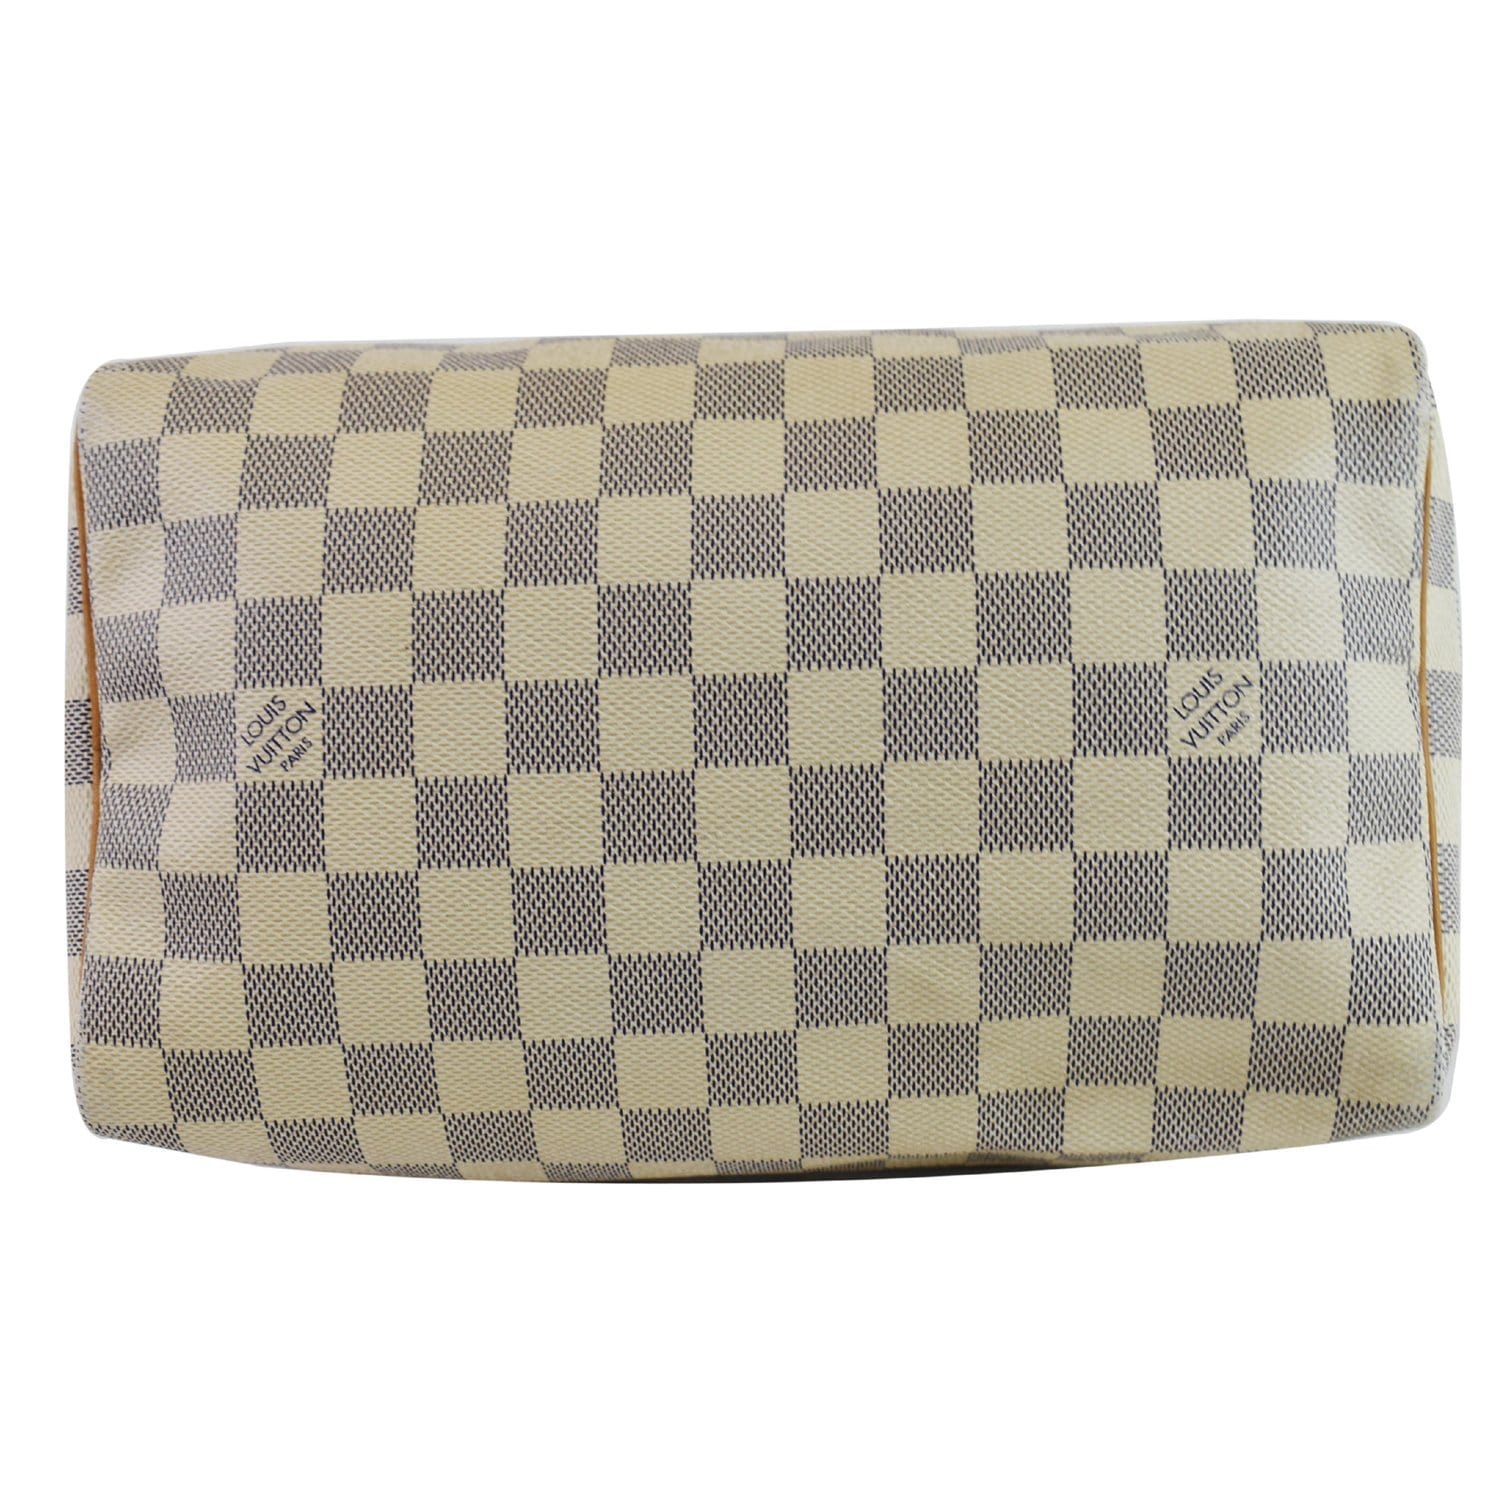 Louis Vuitton Speedy 25cm Damier Azur Canvas Handbag MSIXZDE 144020006256